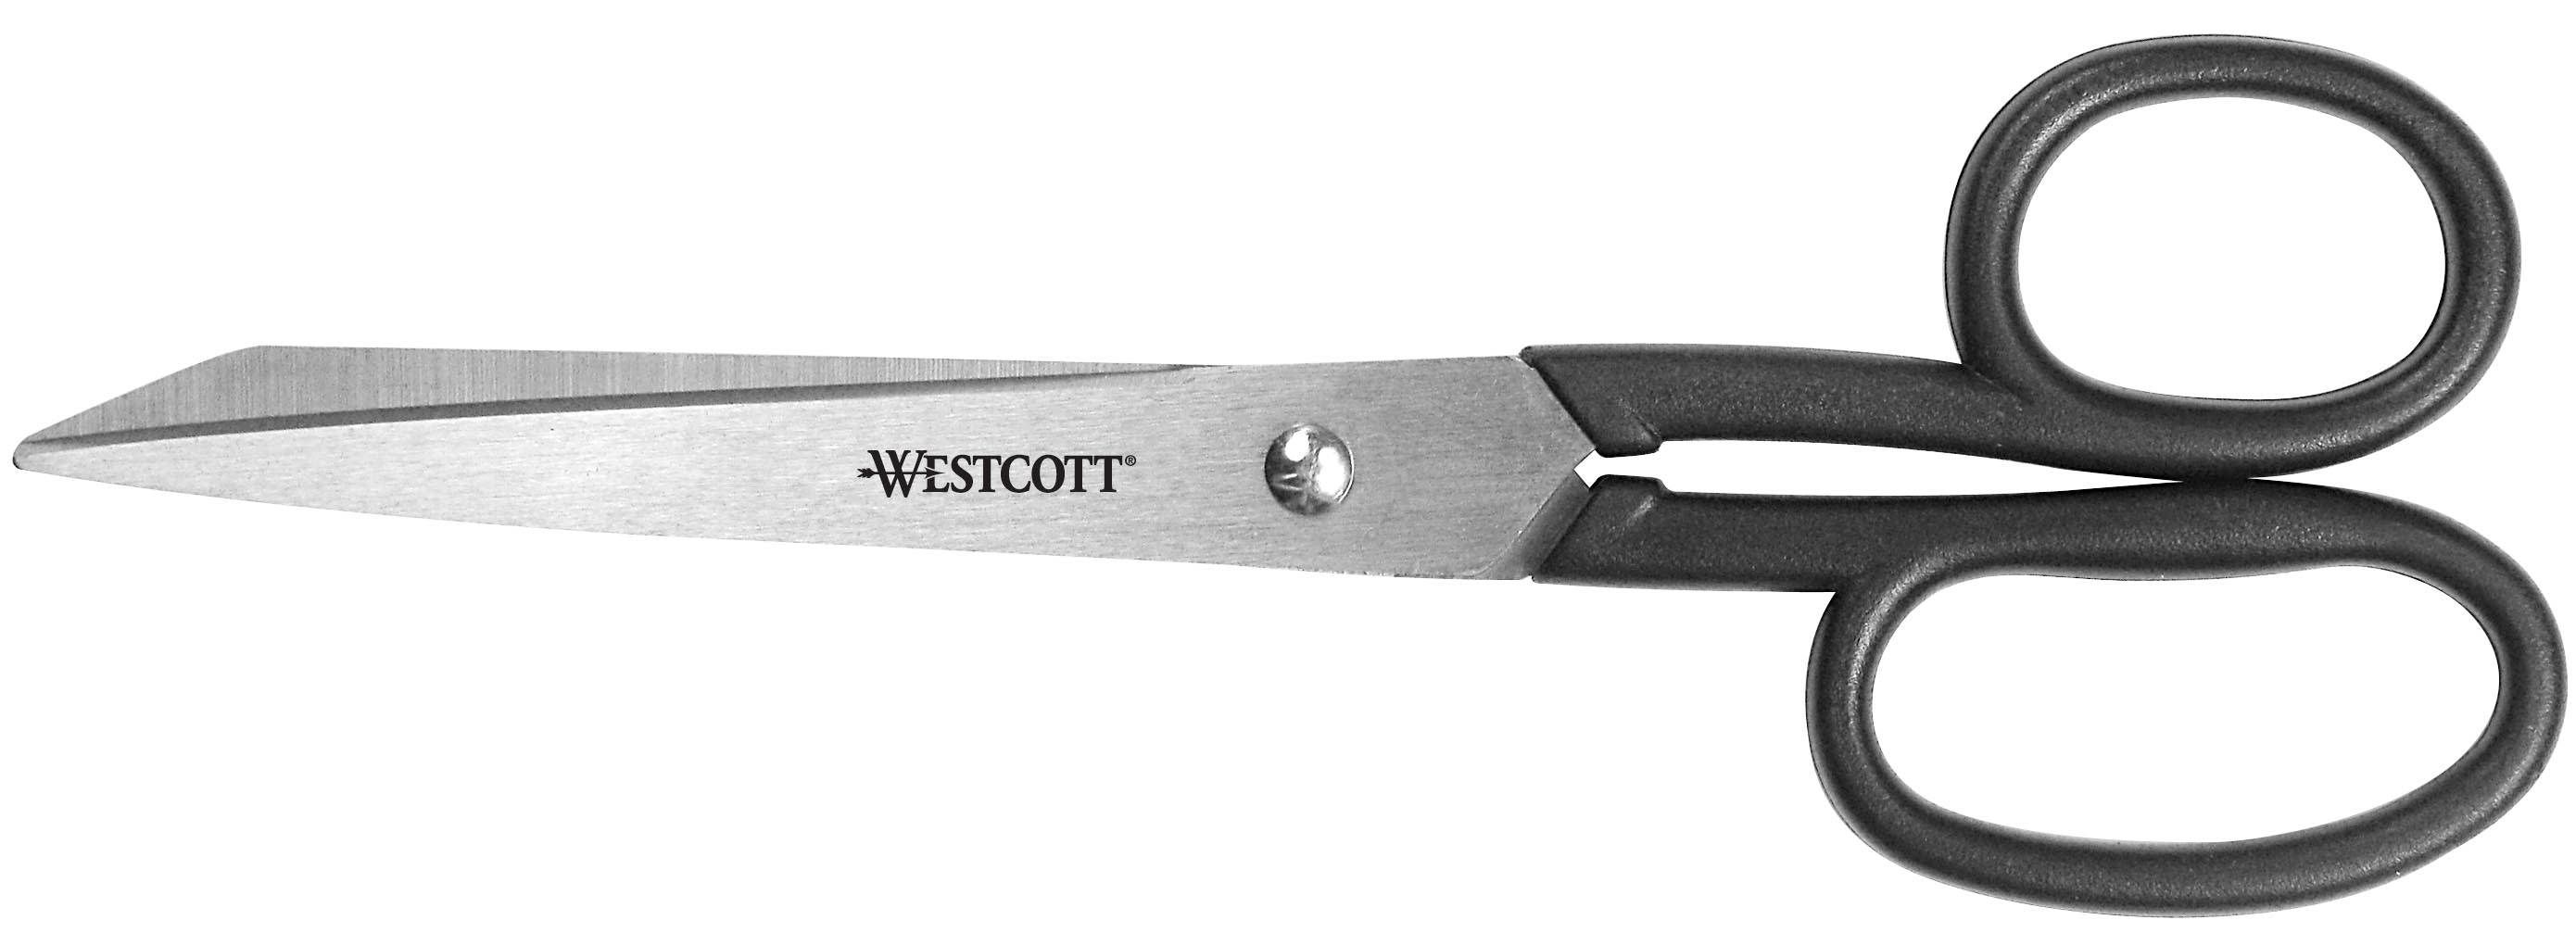 Westcott All Purpose Kleencut Stainless Steel Scissors, 7", Black (19017)